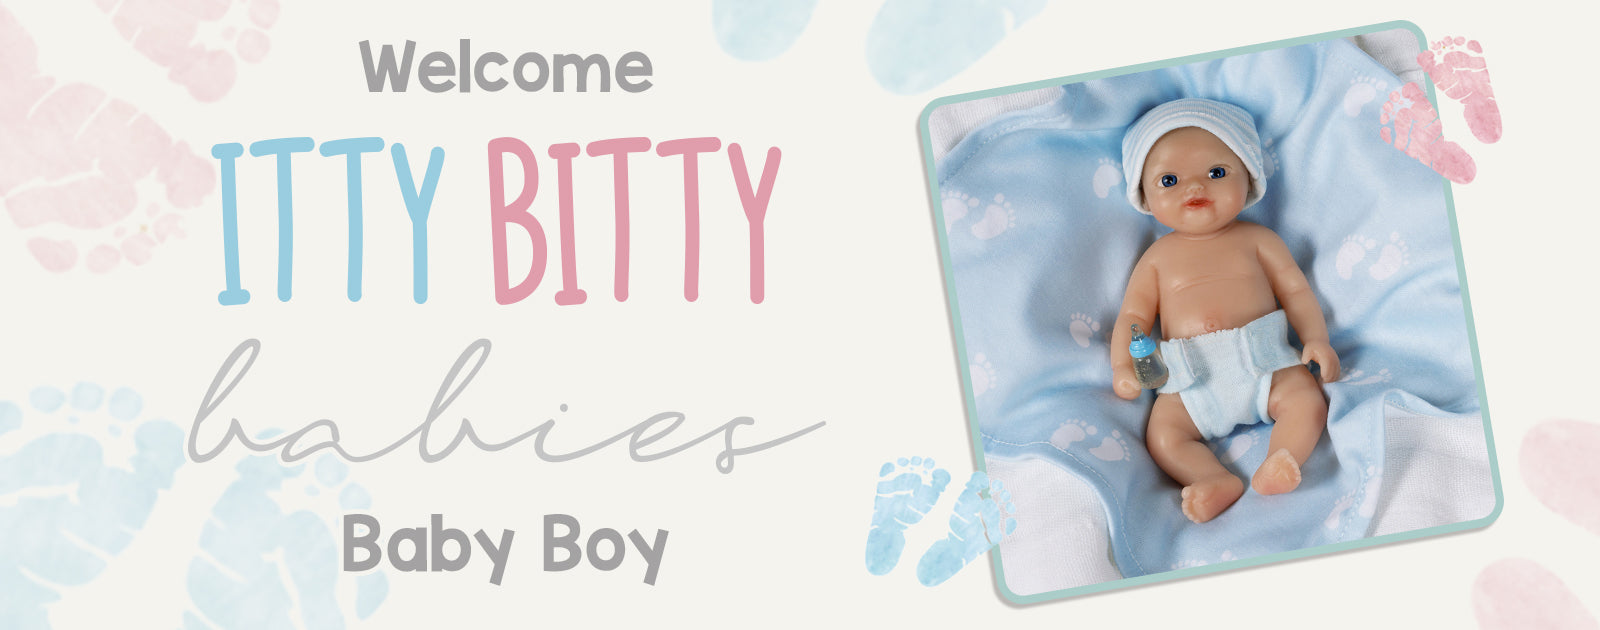 Itty Bitty Baby Boy_Web Banner_1600x630px.jpg__PID:ac85925e-00dc-4d15-bf6e-b88fb50f40f0